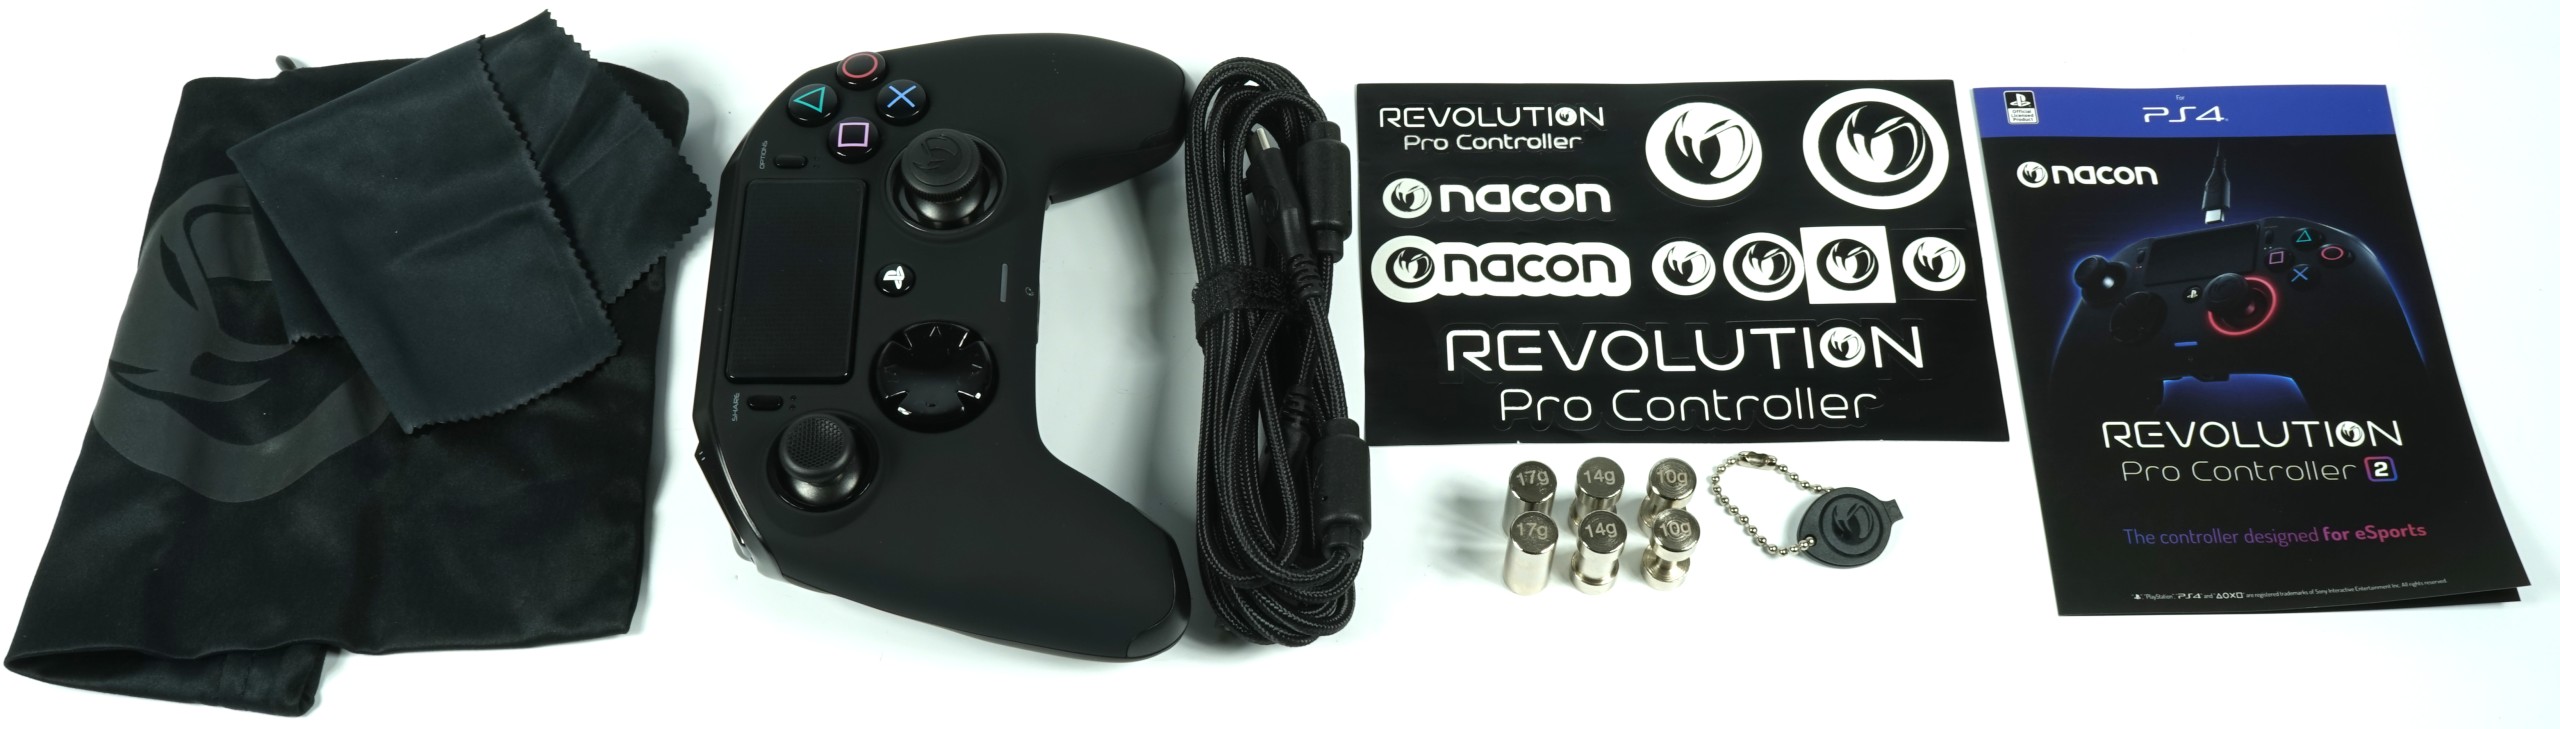 nacon revolution pro 2